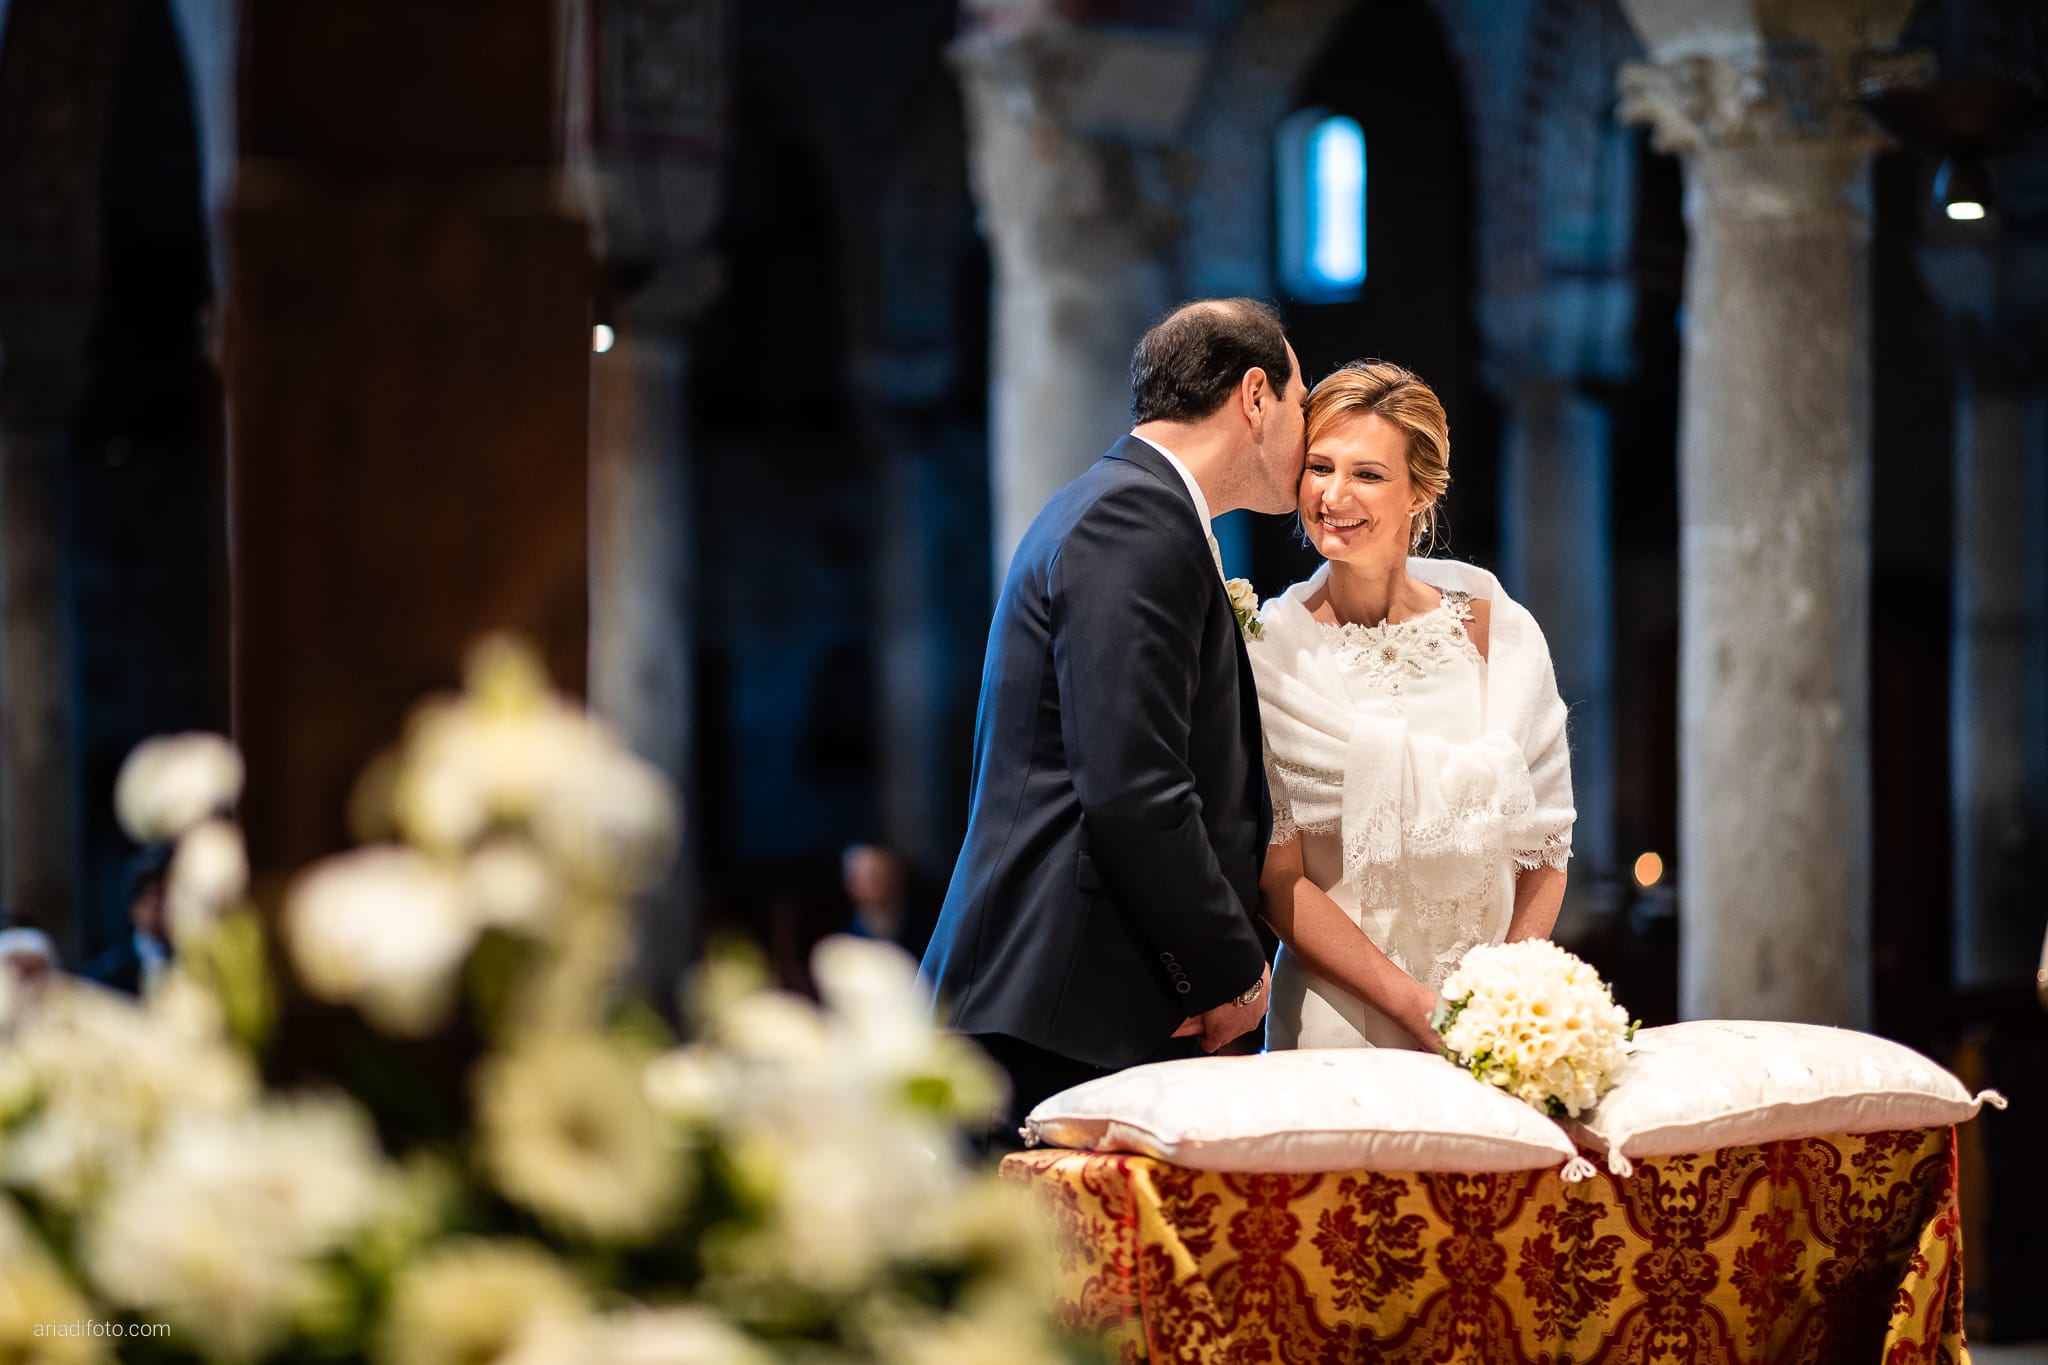 Elena Guido Matrimonio elegante Savoia Excelsior Palace Trieste cerimonia Cattedrale San Giusto sposi